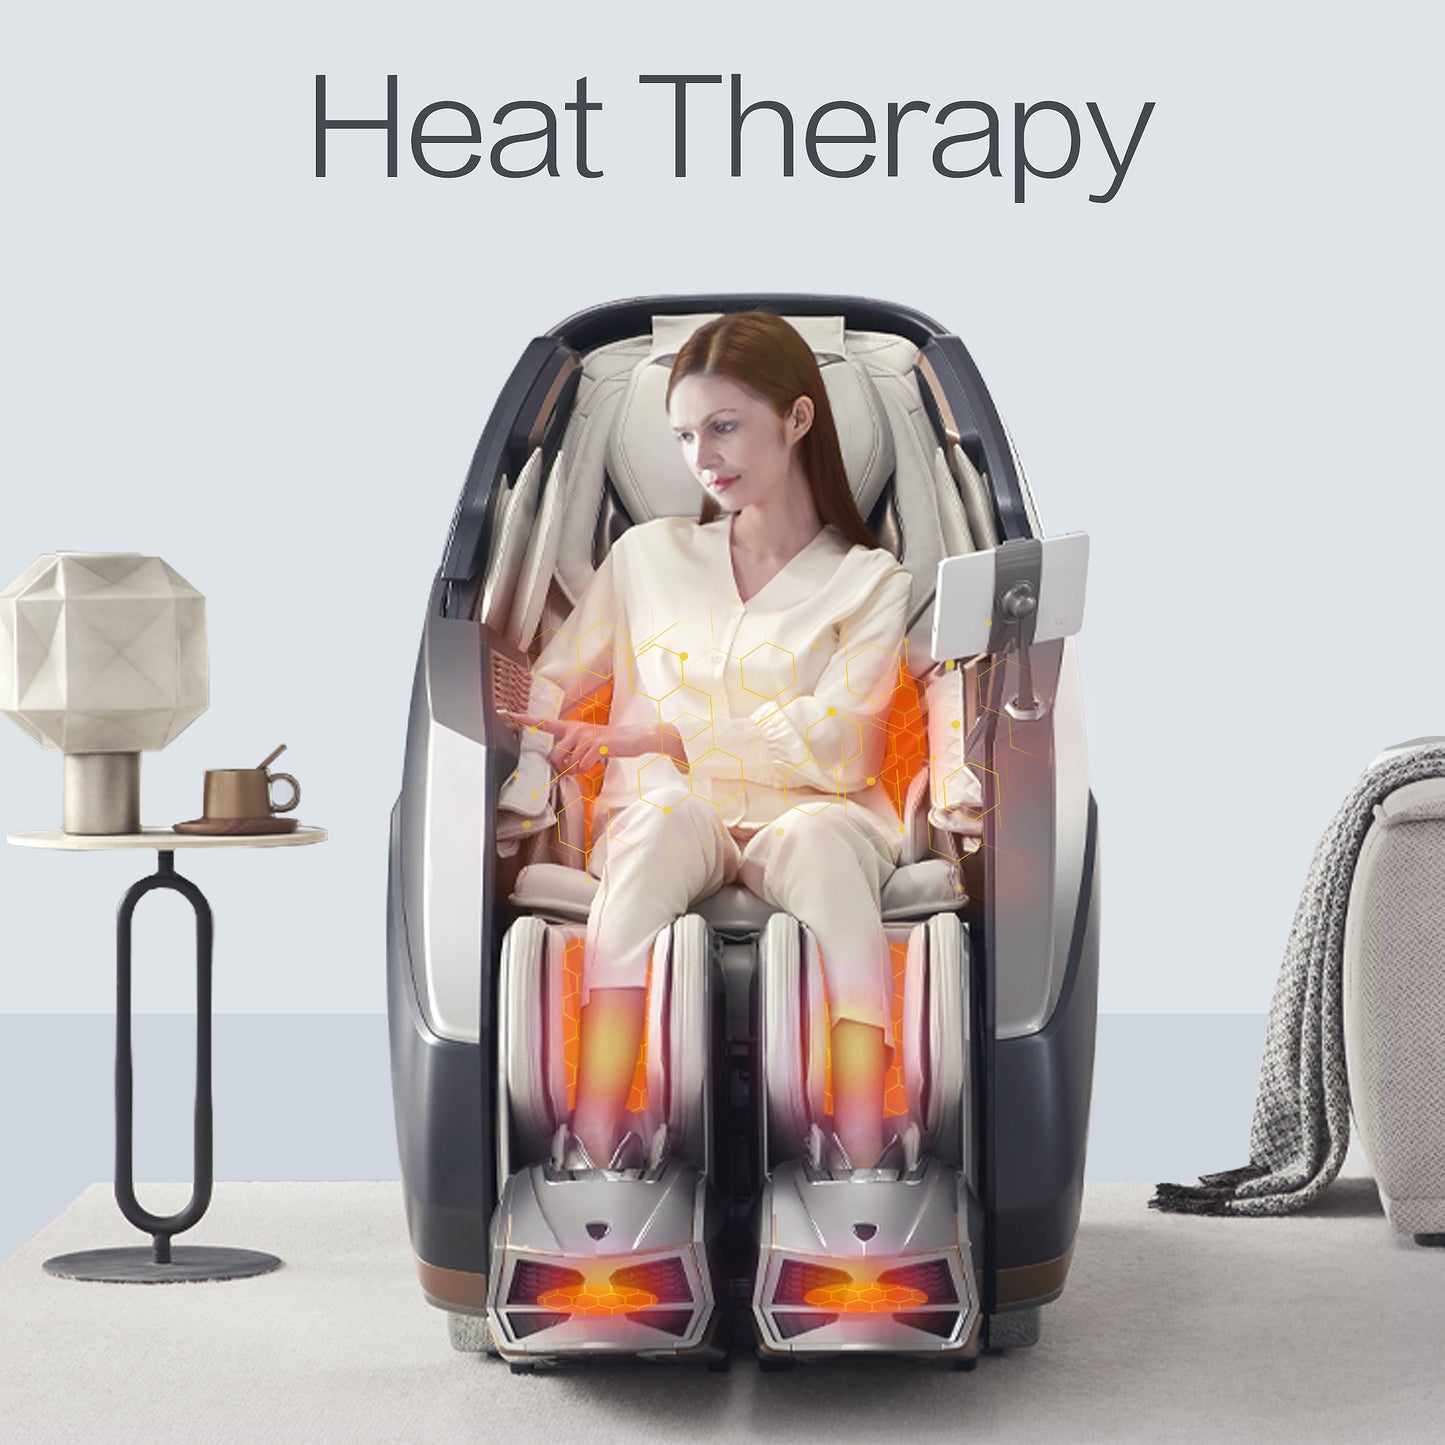 8802 Luxury 4D Fullbody Massage Chair